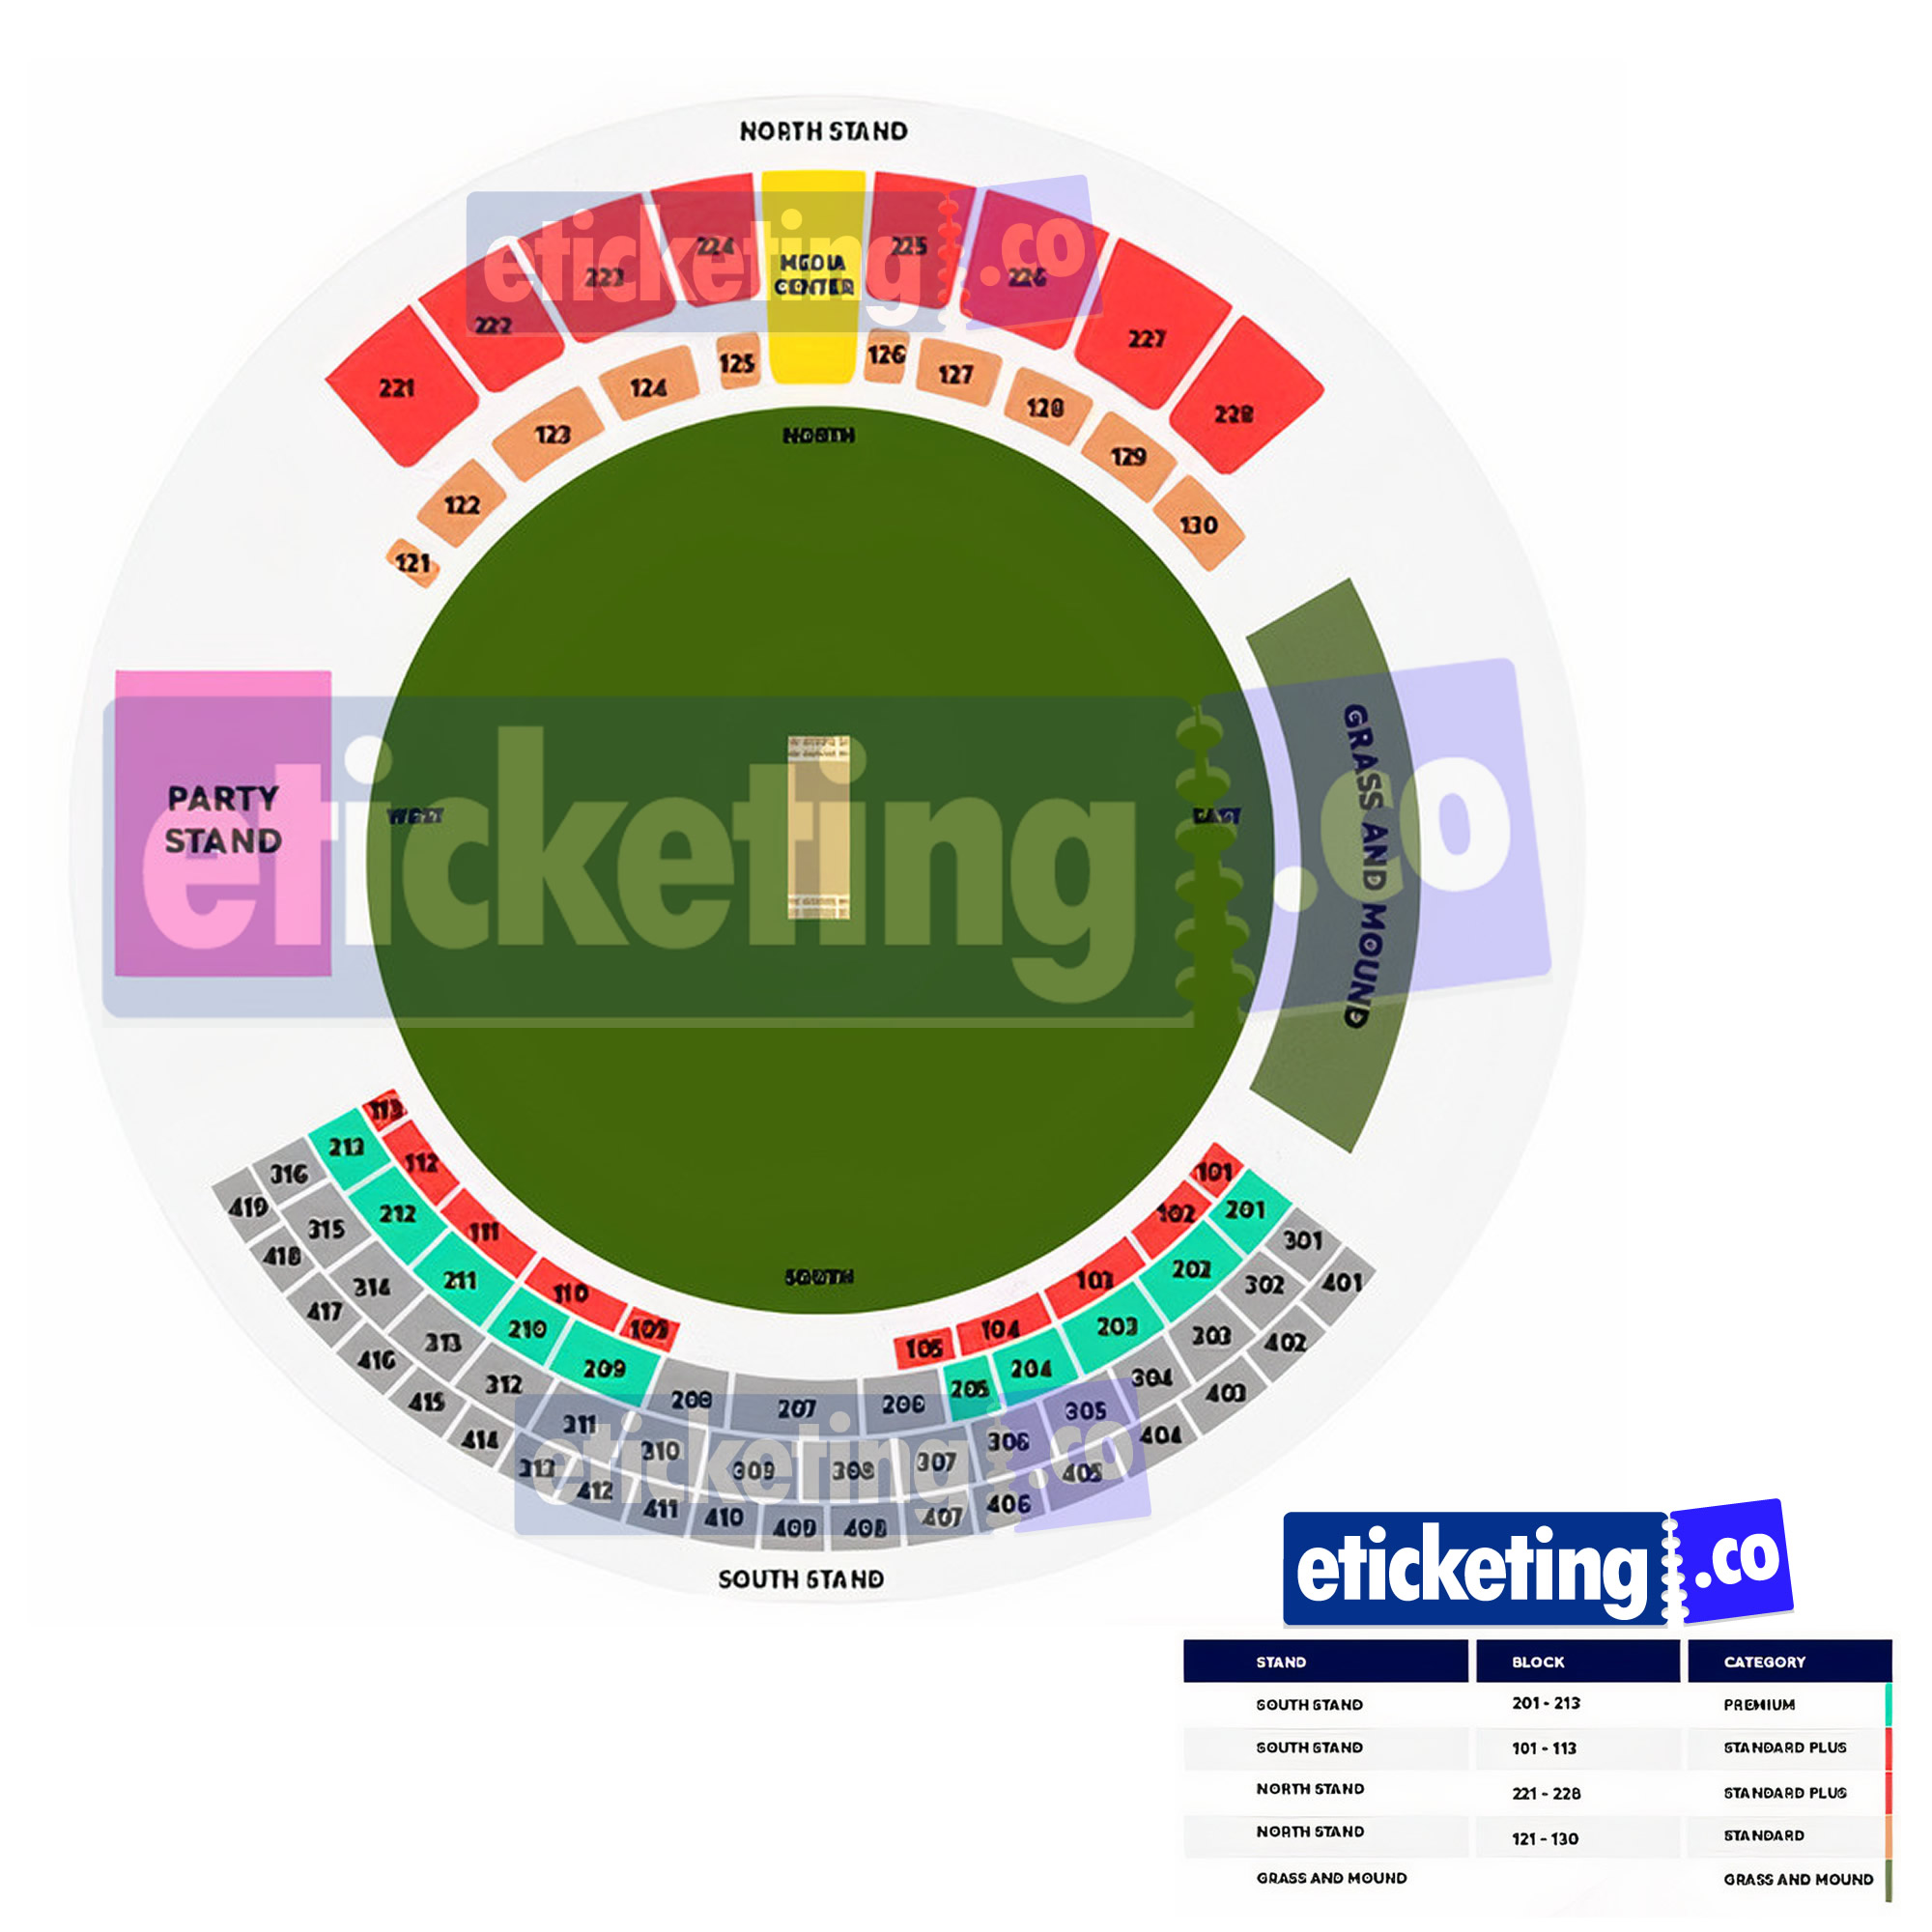 Sir Vivian Richards Stadium West Indies vs England 1st ODI Venue Seating Plan